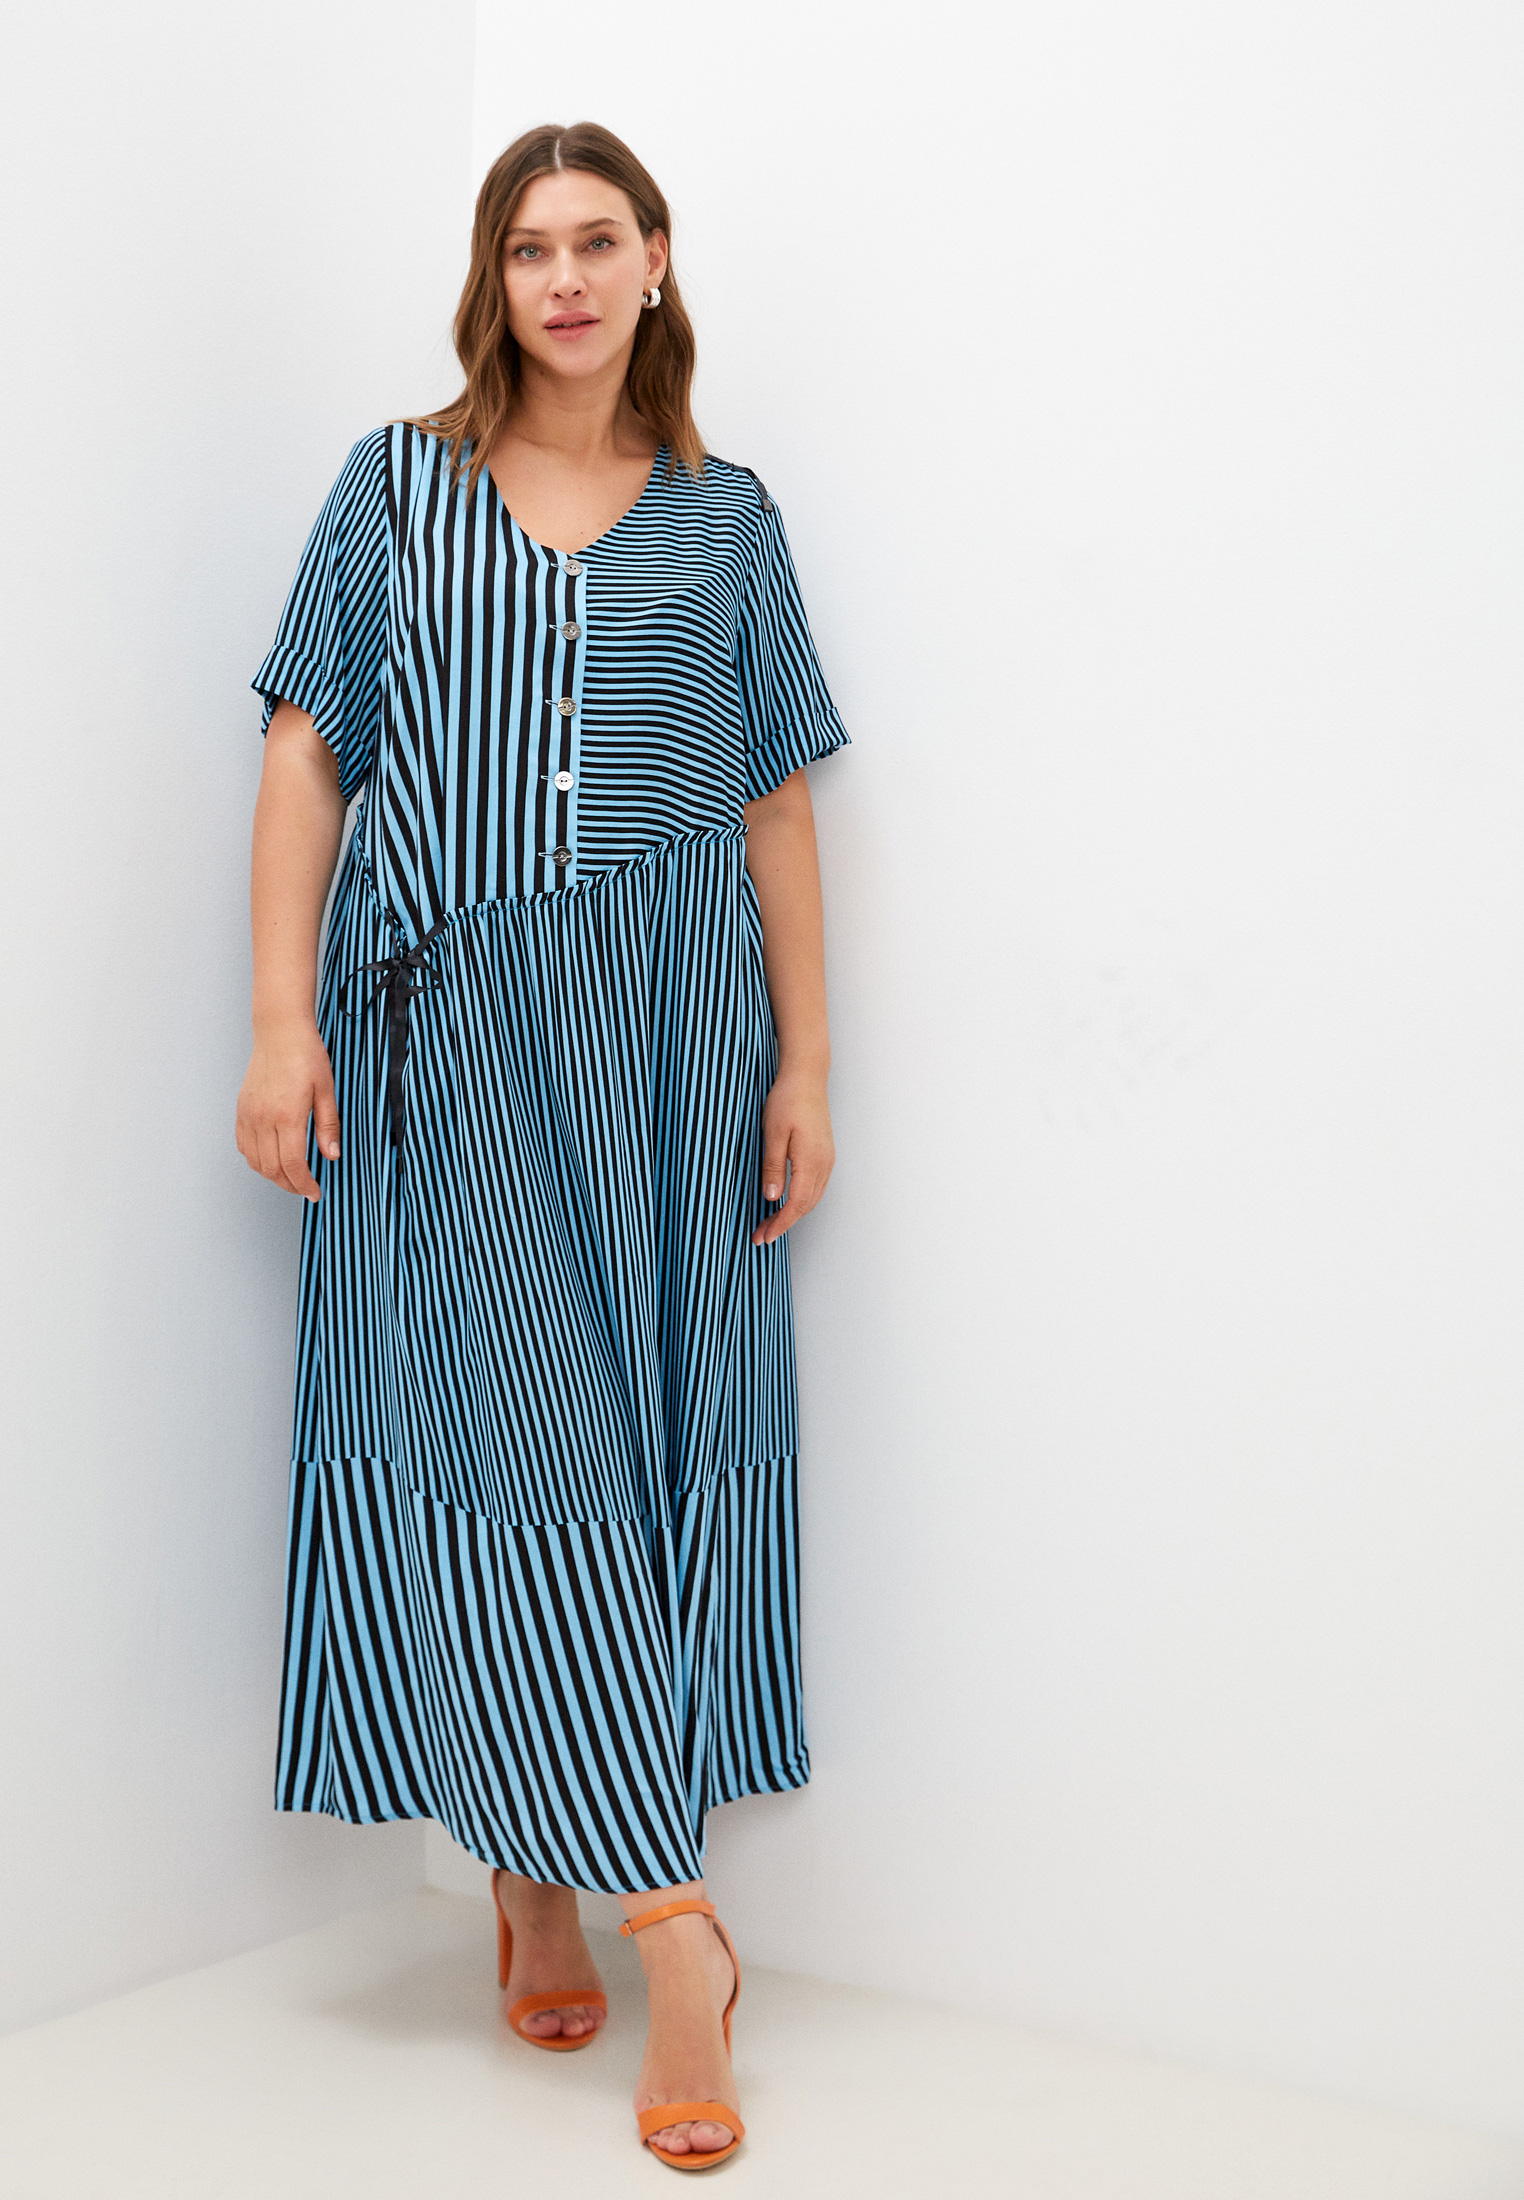 Платье Silver String, цвет: голубой, MP002XW0C3AW — купить в интернет-магазине Lamoda